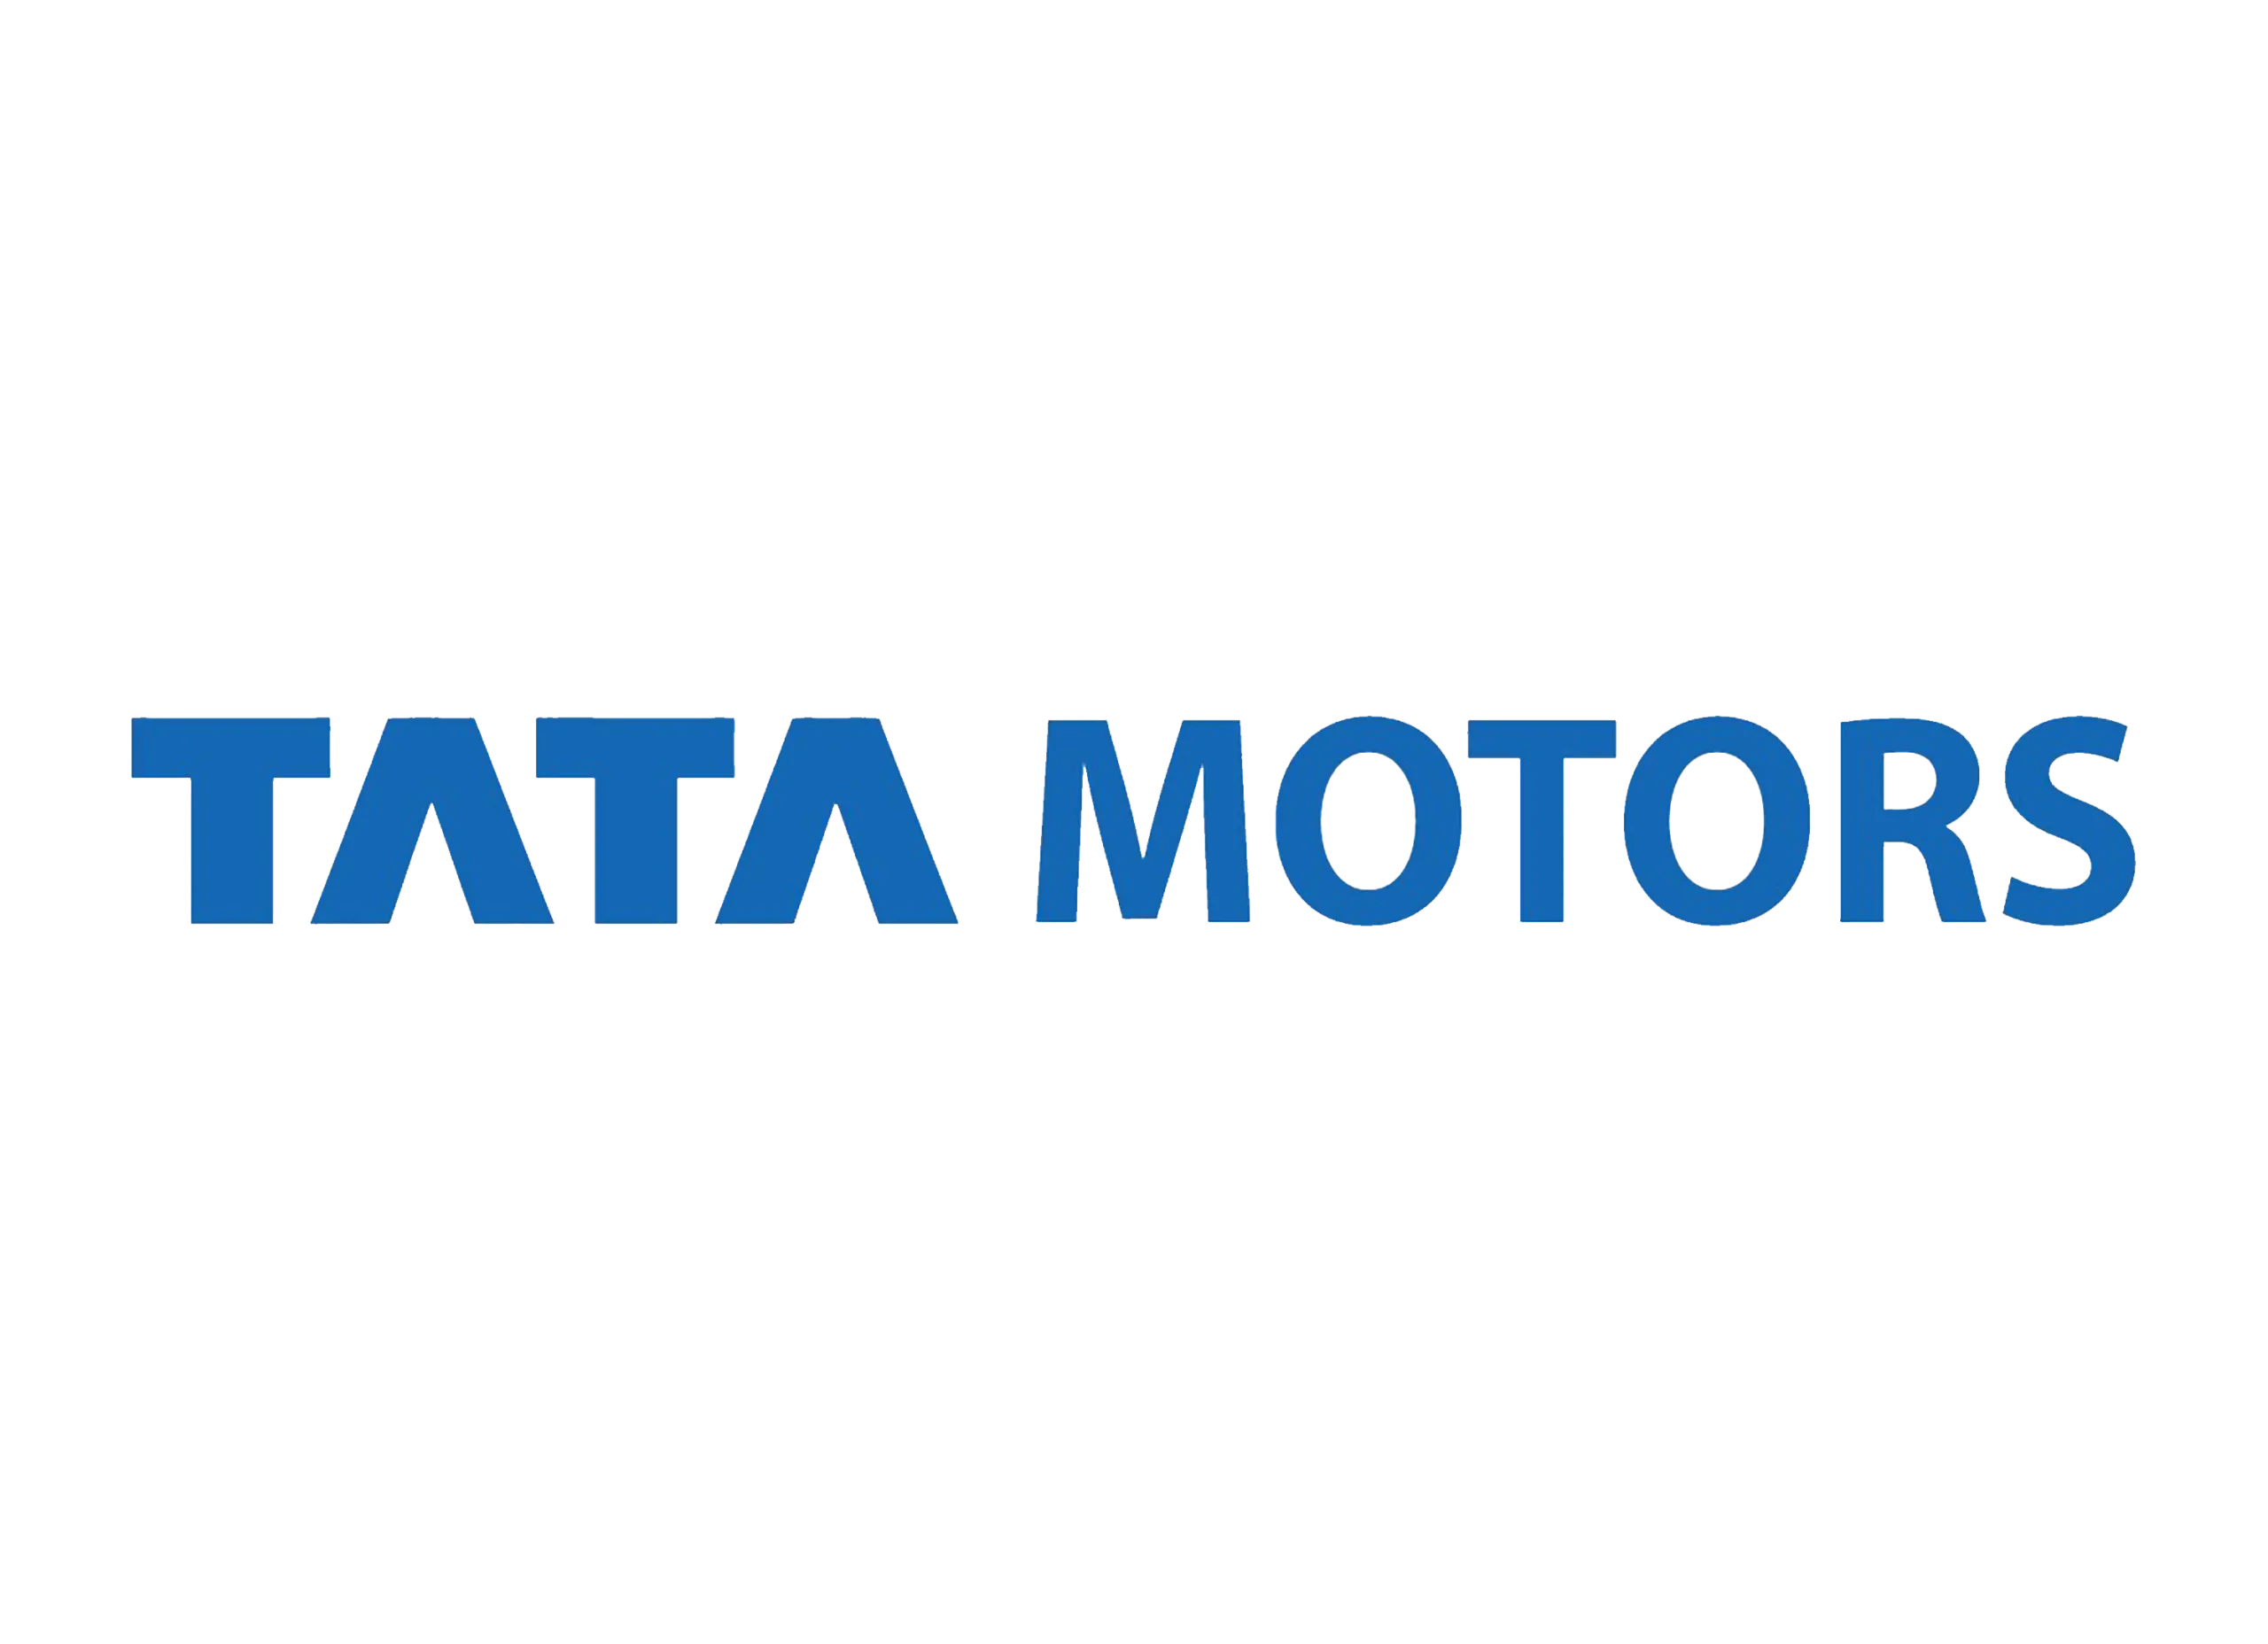 Tata logo 2003-present